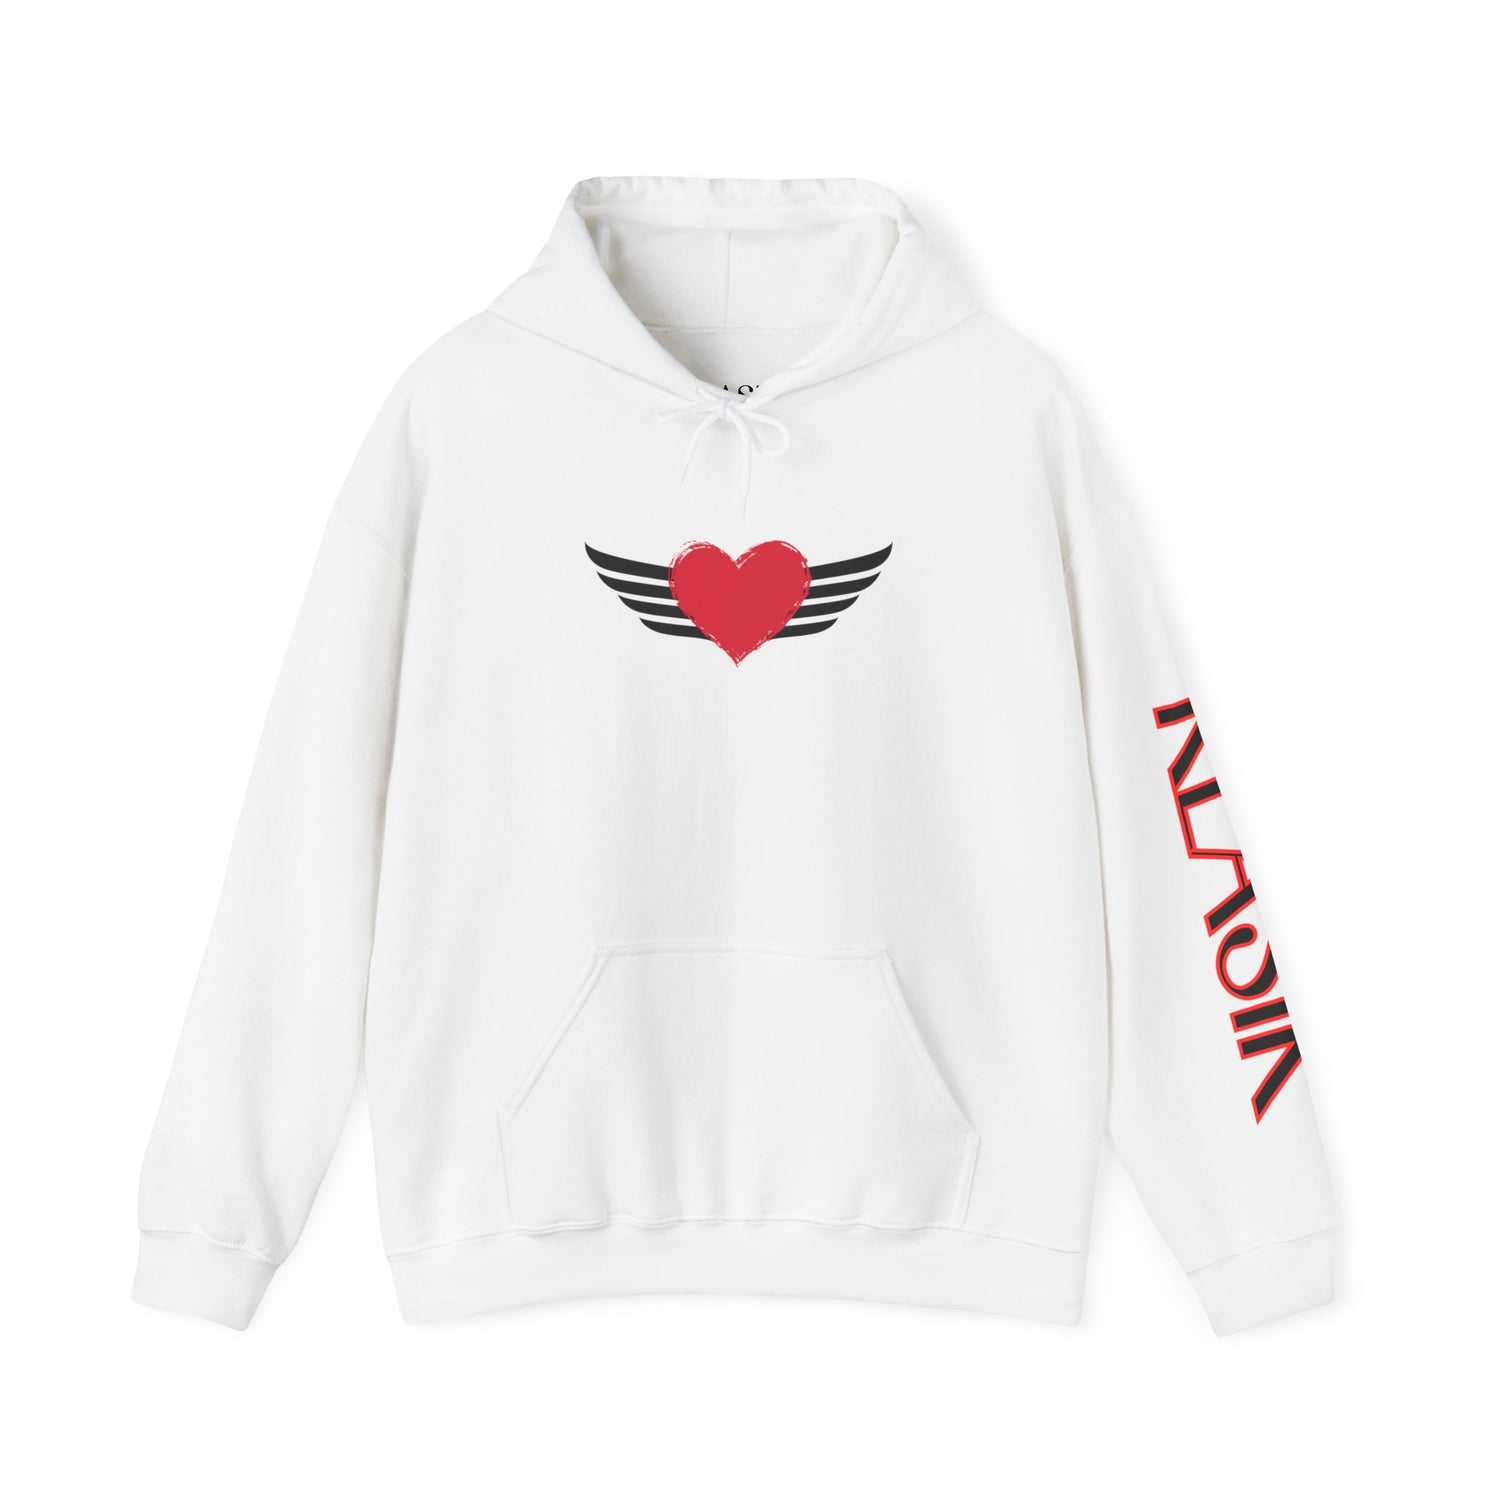 Red Winged Heart - Hooded Sweatshirt